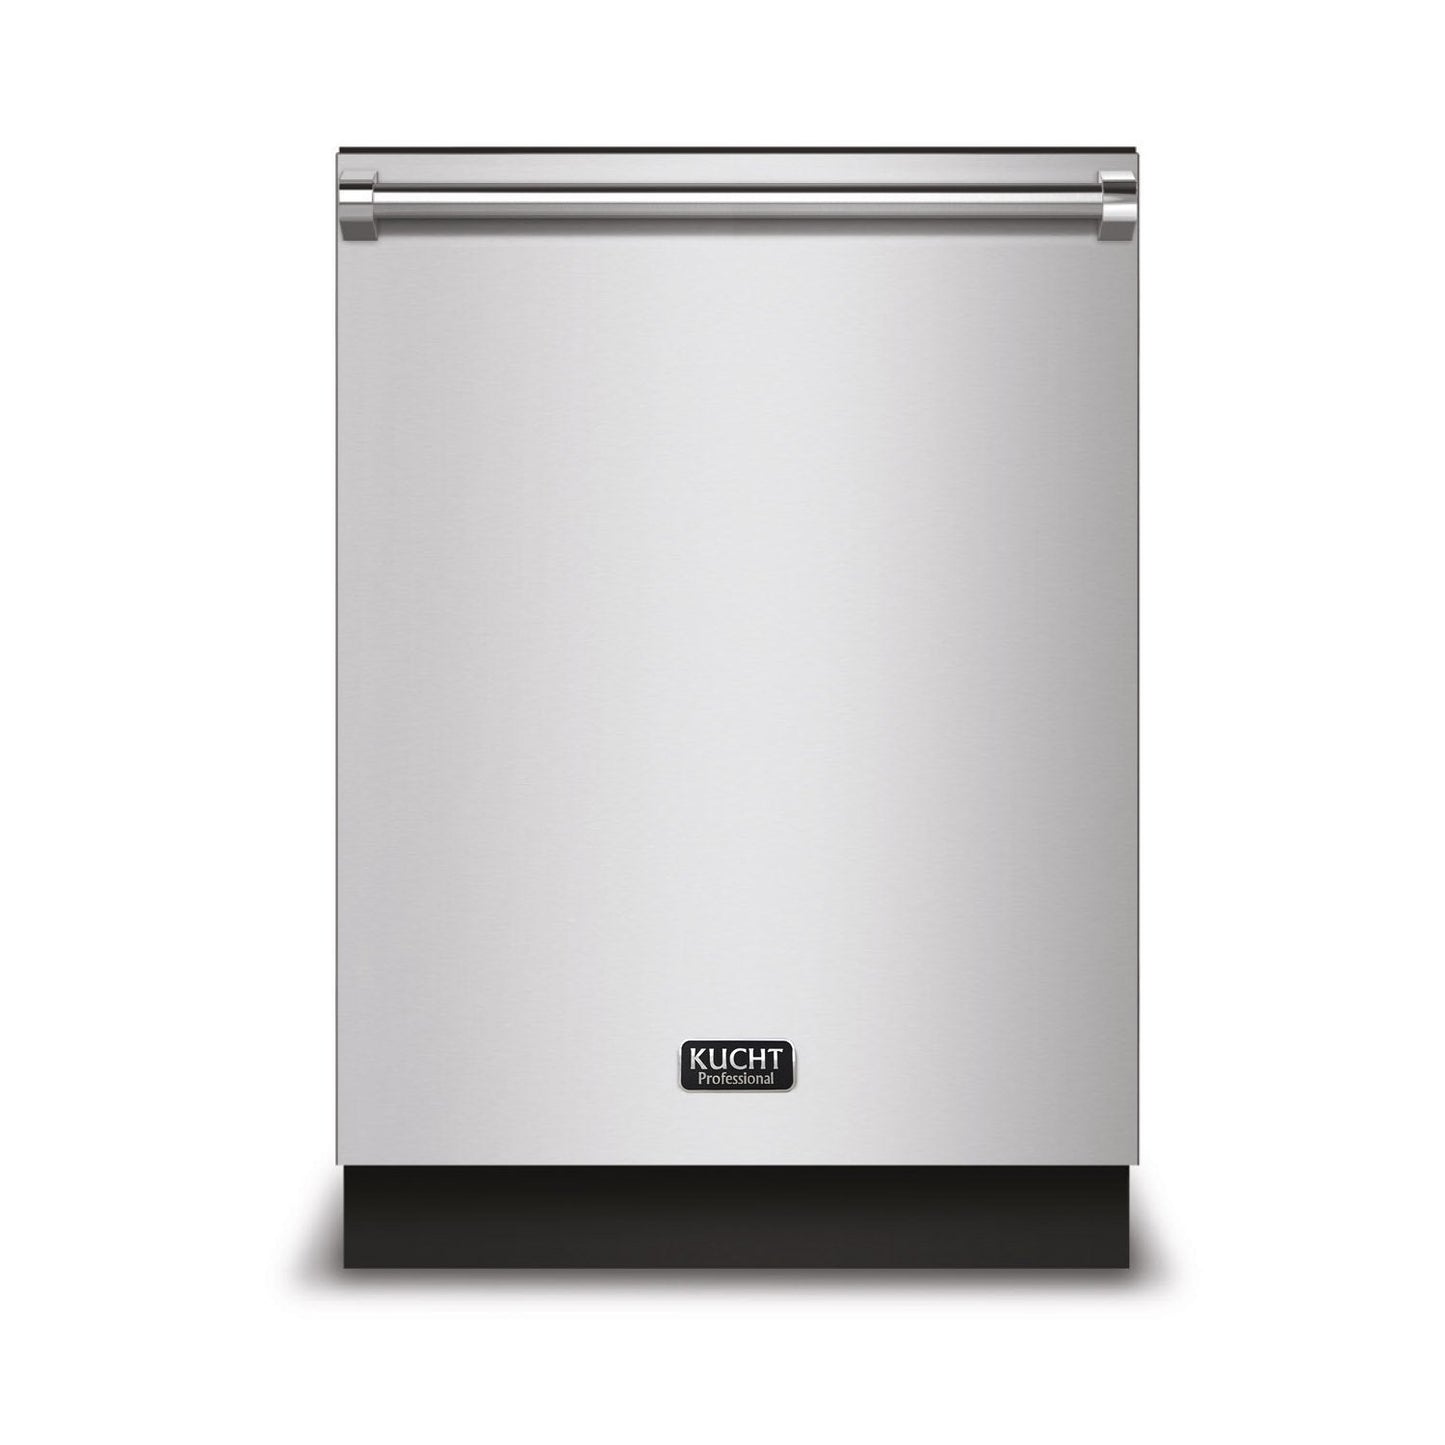 Kucht 4-Piece Appliance Package - 30-Inch Dual Fuel Range, Refrigerator, Wall Mount Hood, & Dishwasher in Stainless Steel